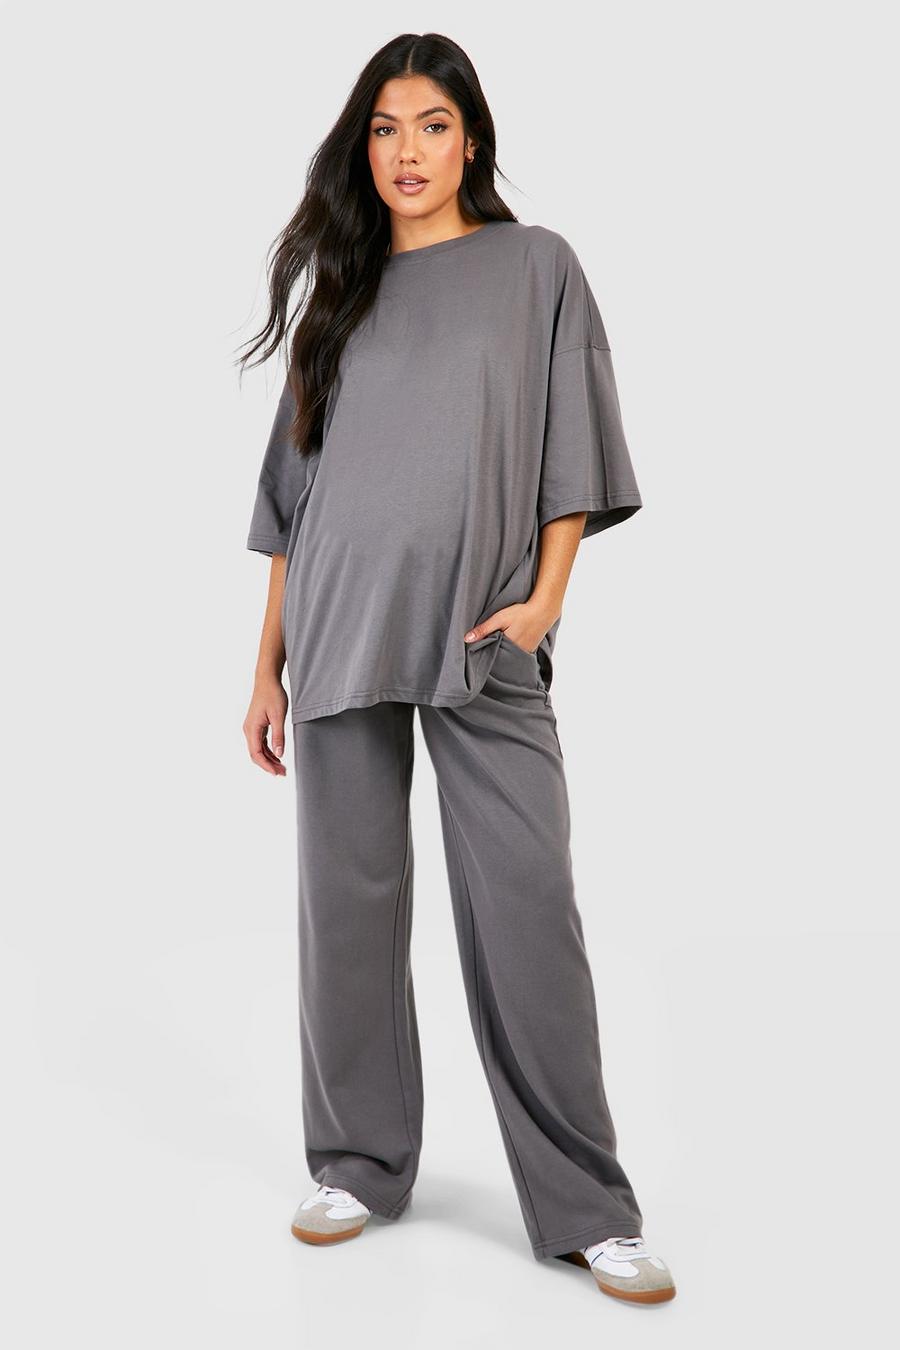 Charcoal grey Maternity T-shirt And Straight Leg Jogger Set